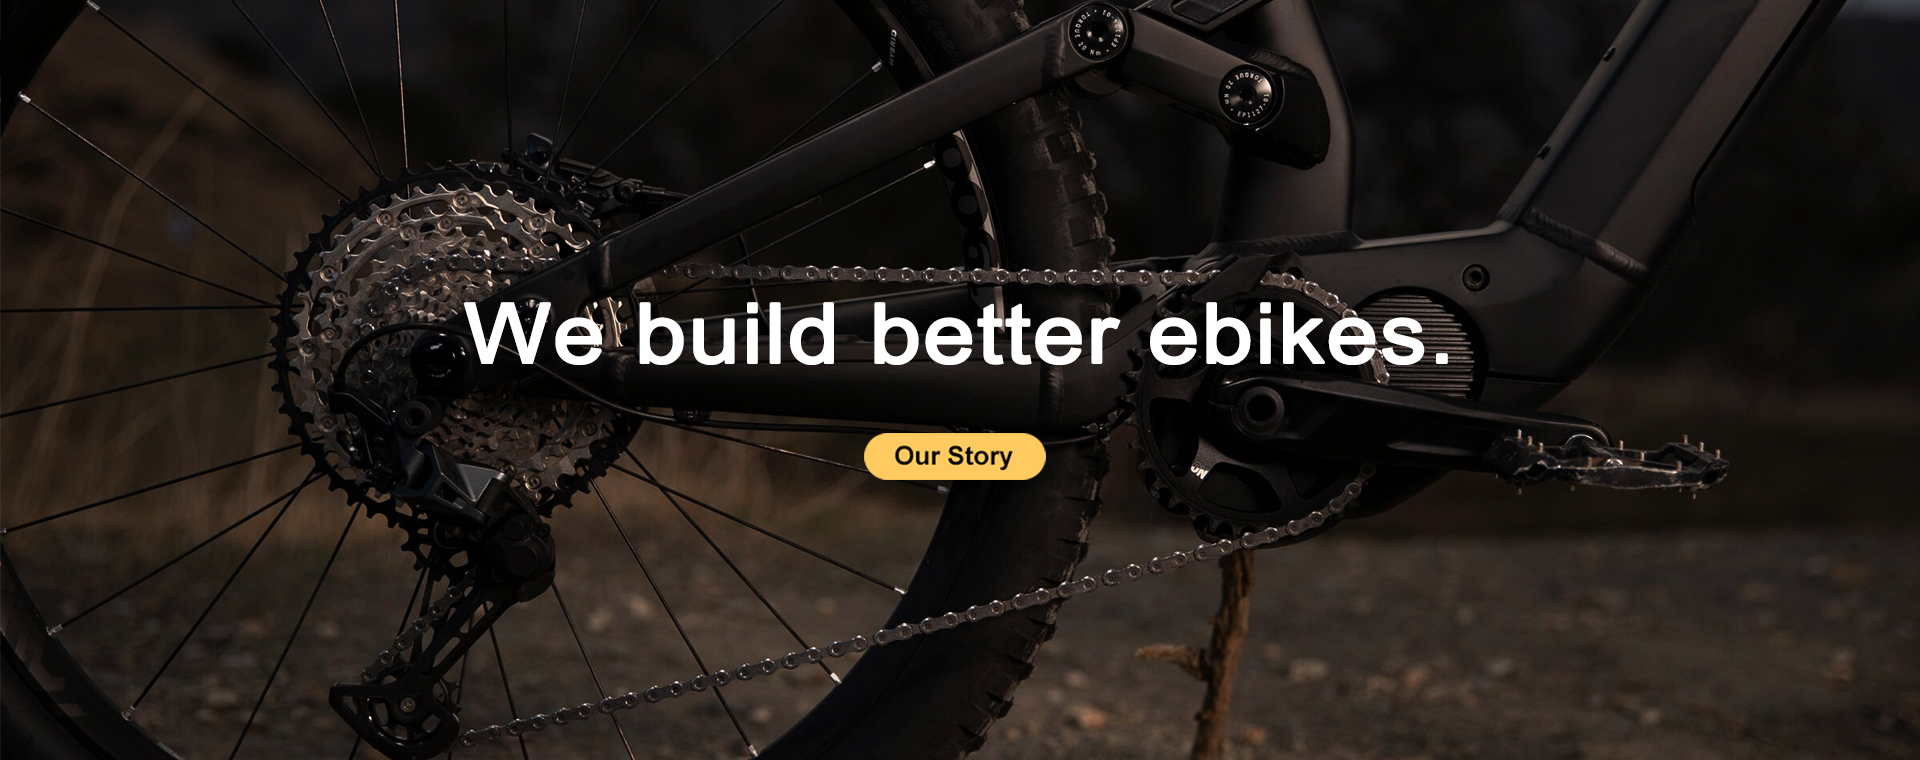 Freepath, we build better electric bikes